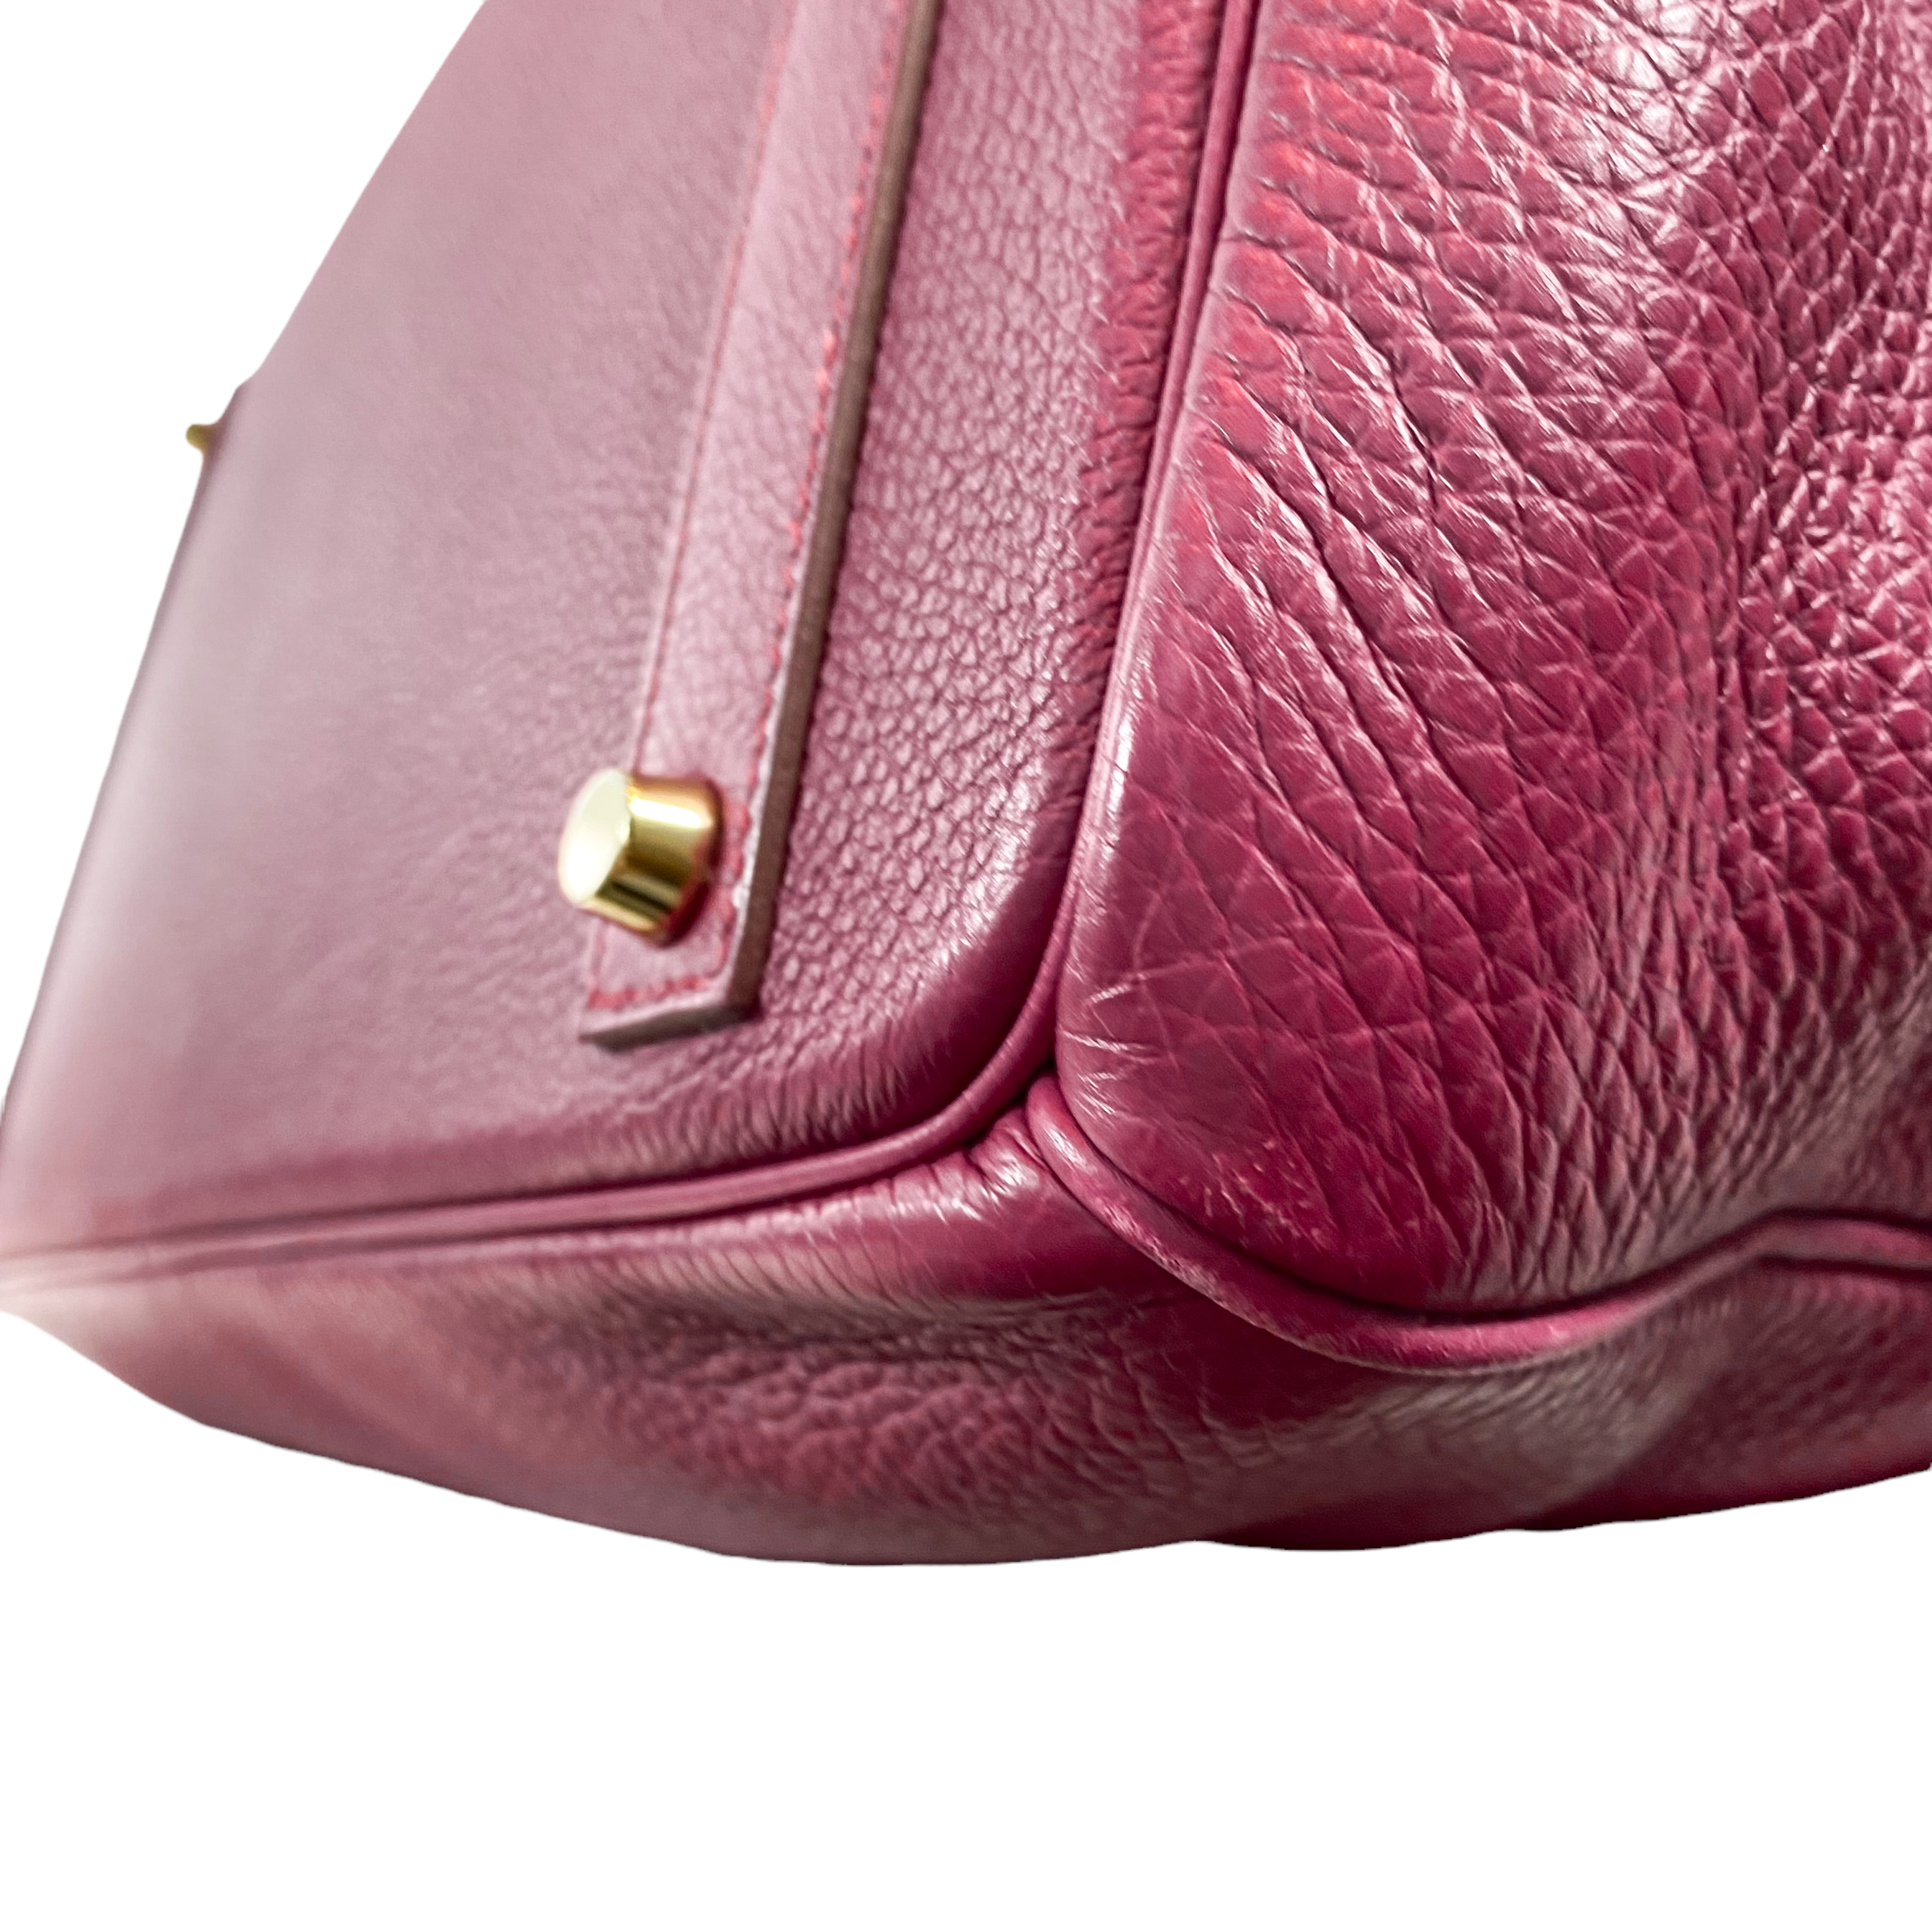 Hermes Birkin 35 Togo Leather 2010 Review, Hermes Handbags